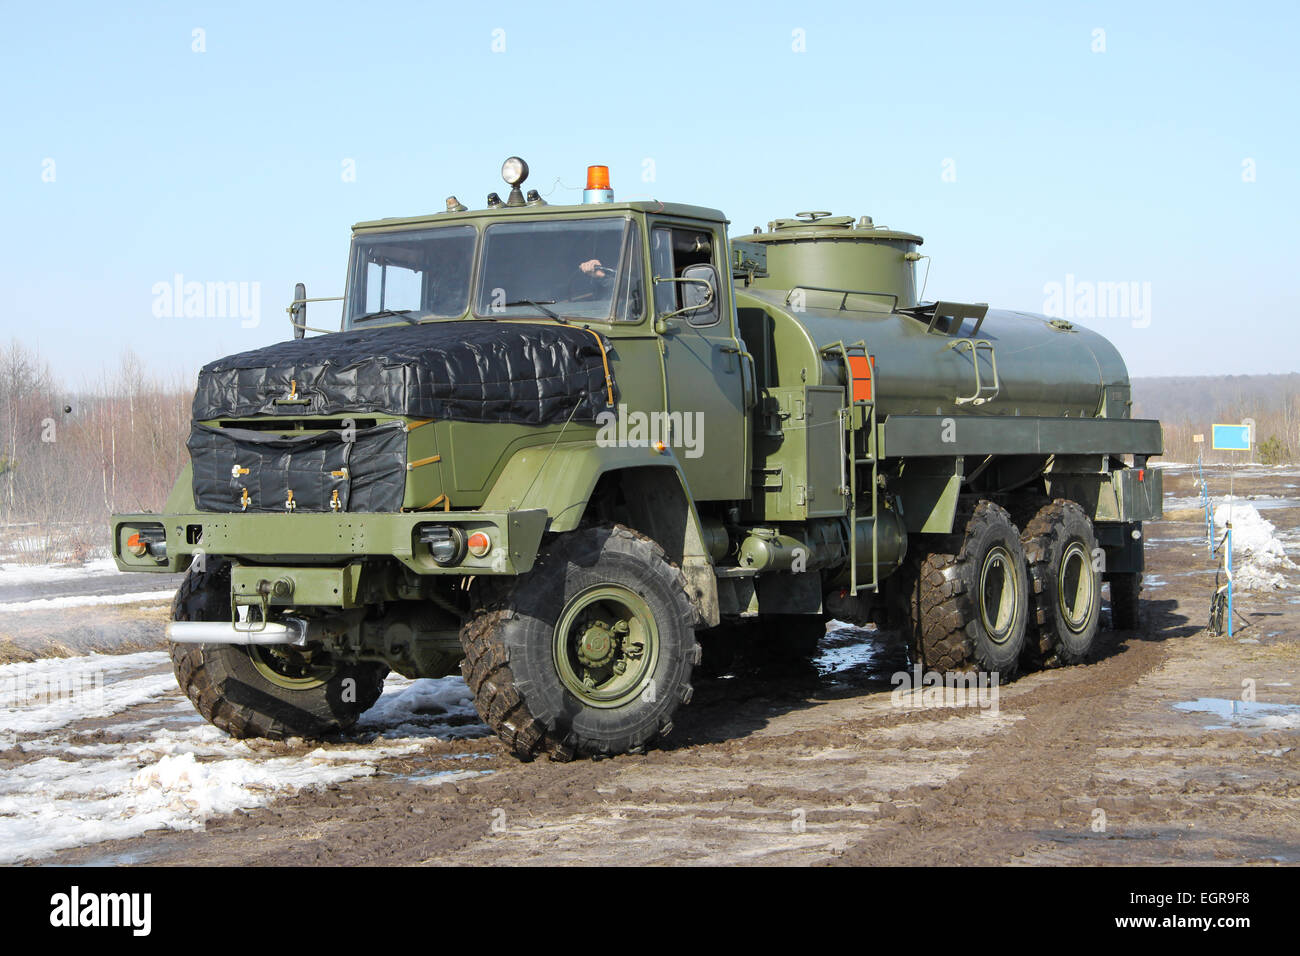 army-fuel-truck-in-the-field-depot-EGR9F8.jpg